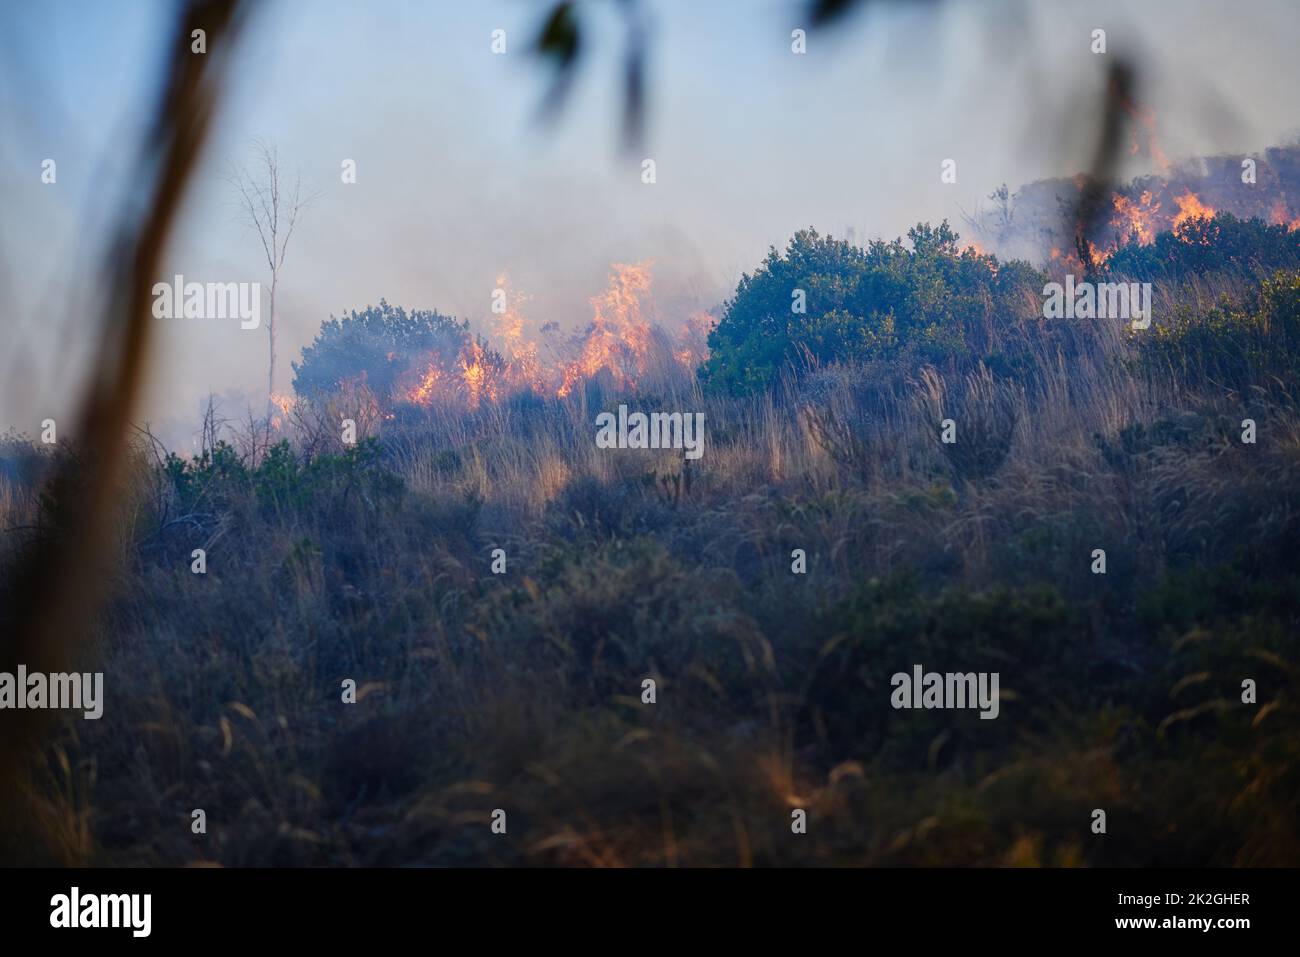 Wildfire destruction. Shot of a wild fire burning. Stock Photo